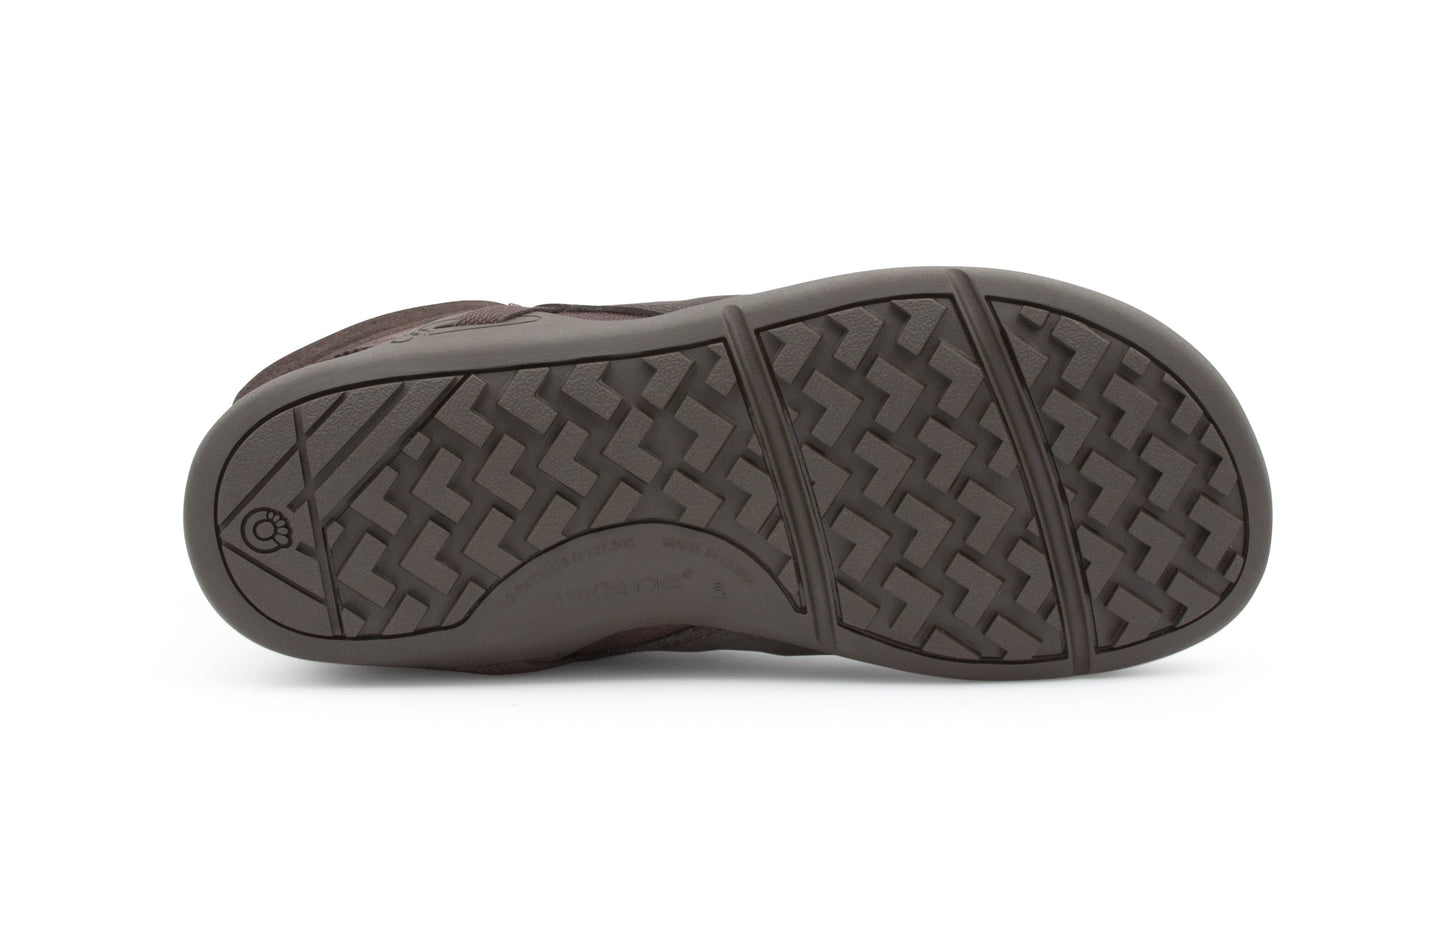 Xero Shoes Mika barfods vinterstøvler til kvinder i farven chocolate plum, saal